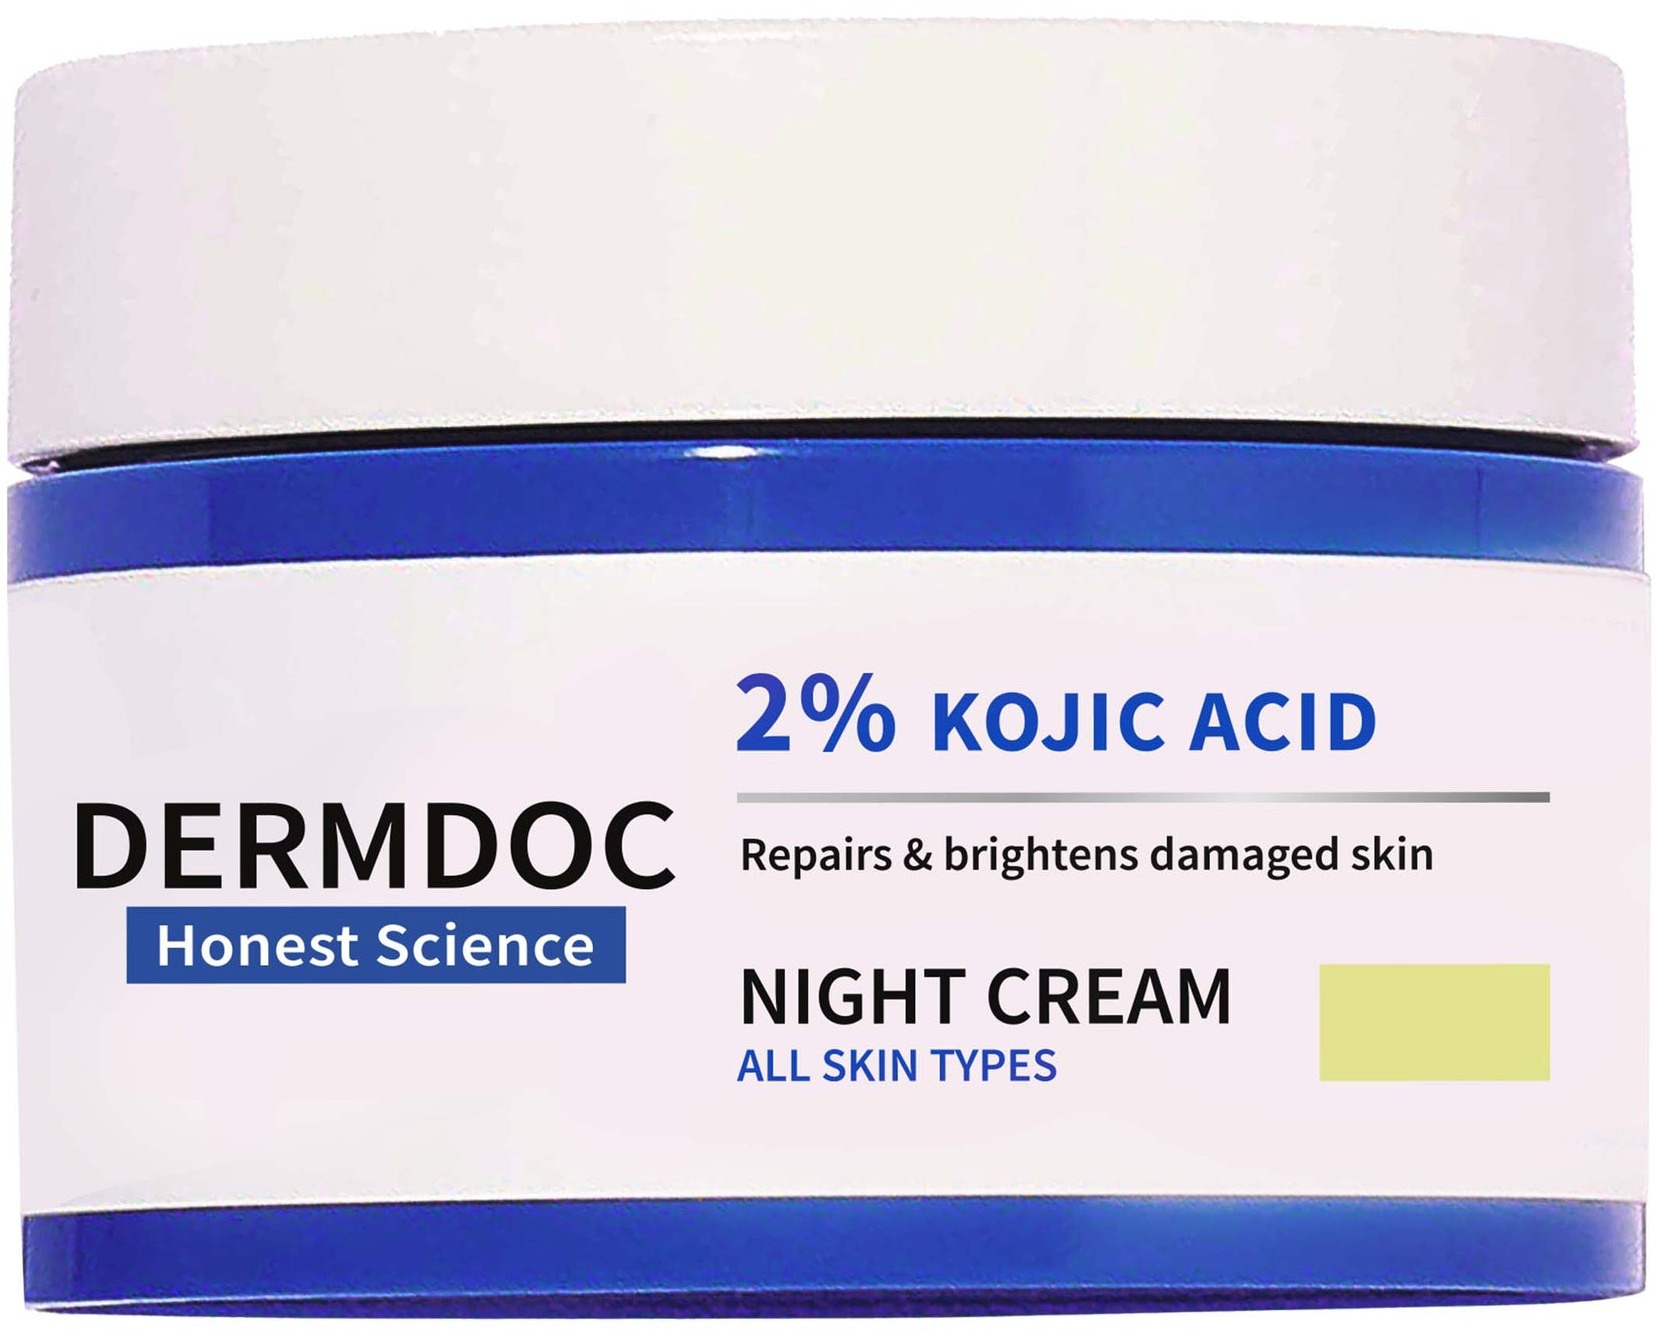 DERMDOC Honest Science 2% Kojic Acid Night Cream